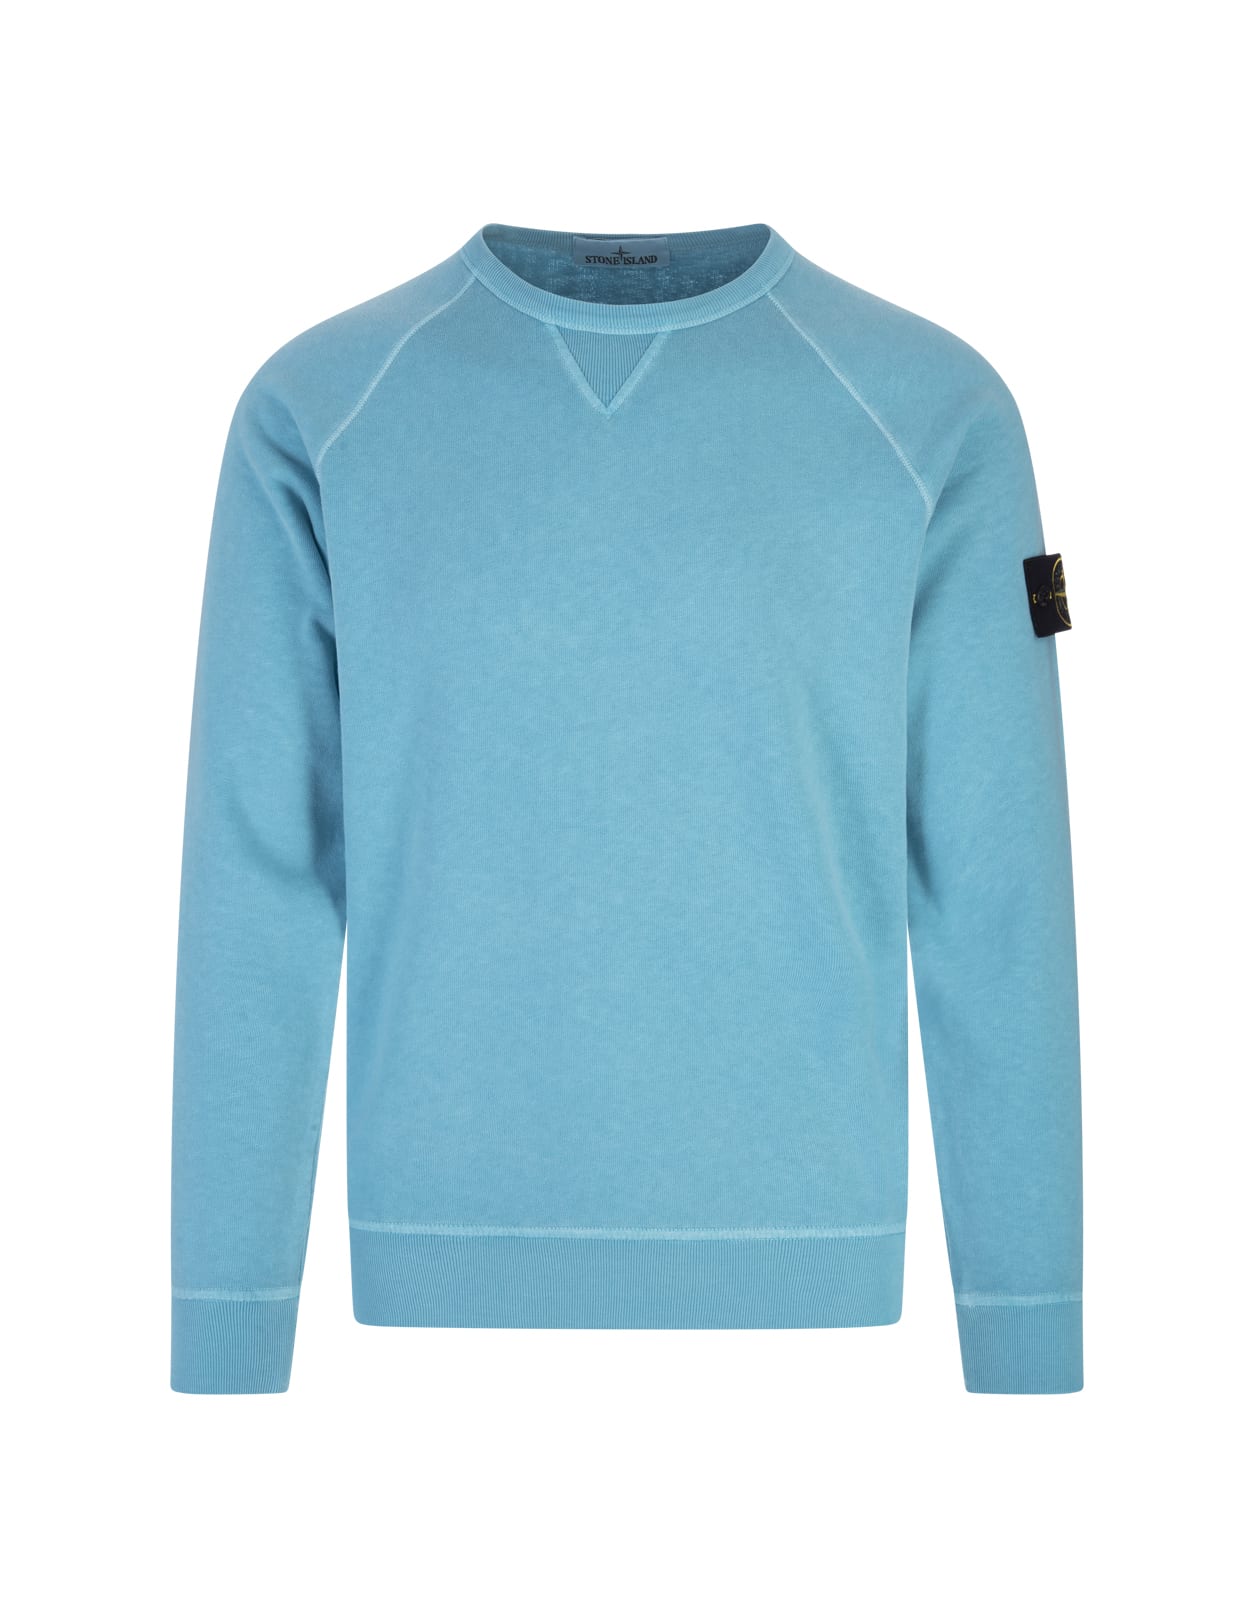 Stone Island Light Blue Crew-Neck Sweatshirt With Old Effect